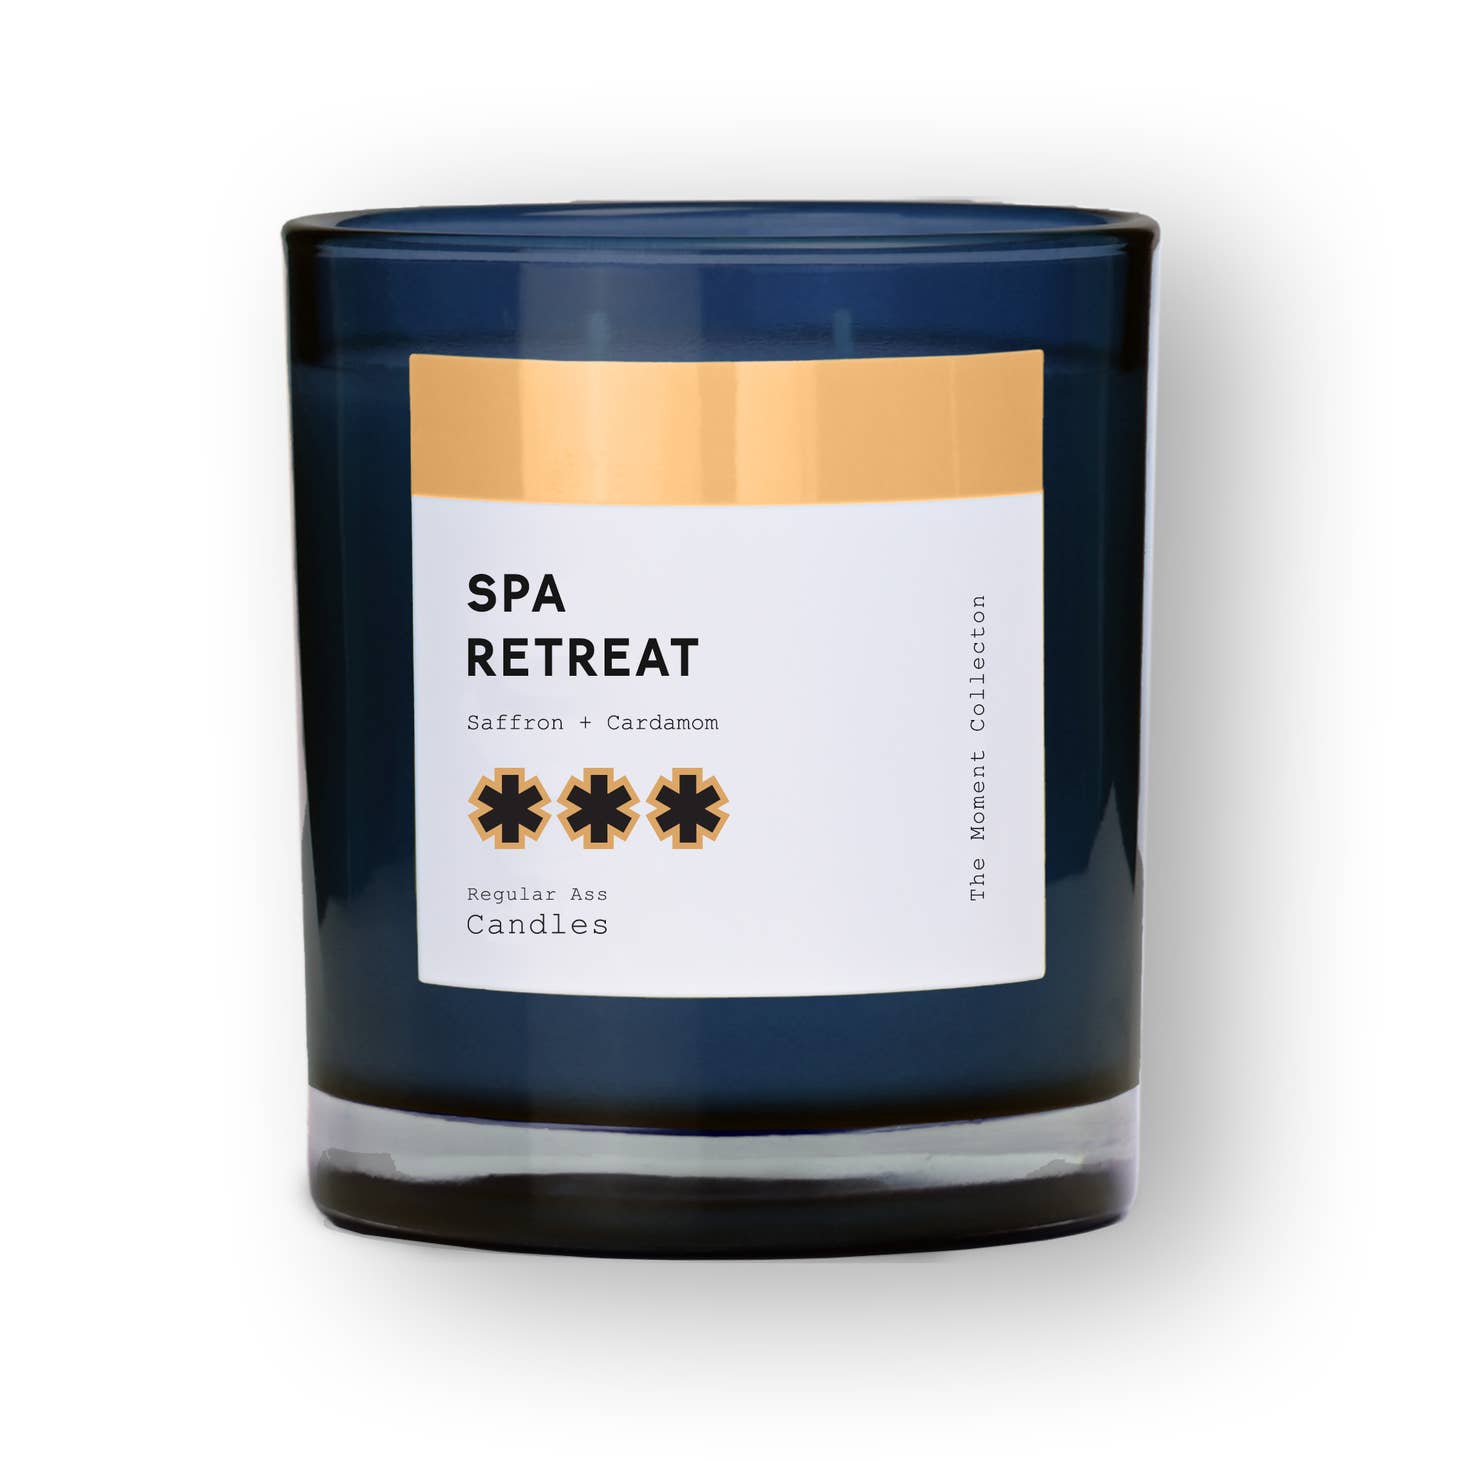 Regular Ass Candles - Spa Retreat 11oz Candle, Saffron + Cardamom